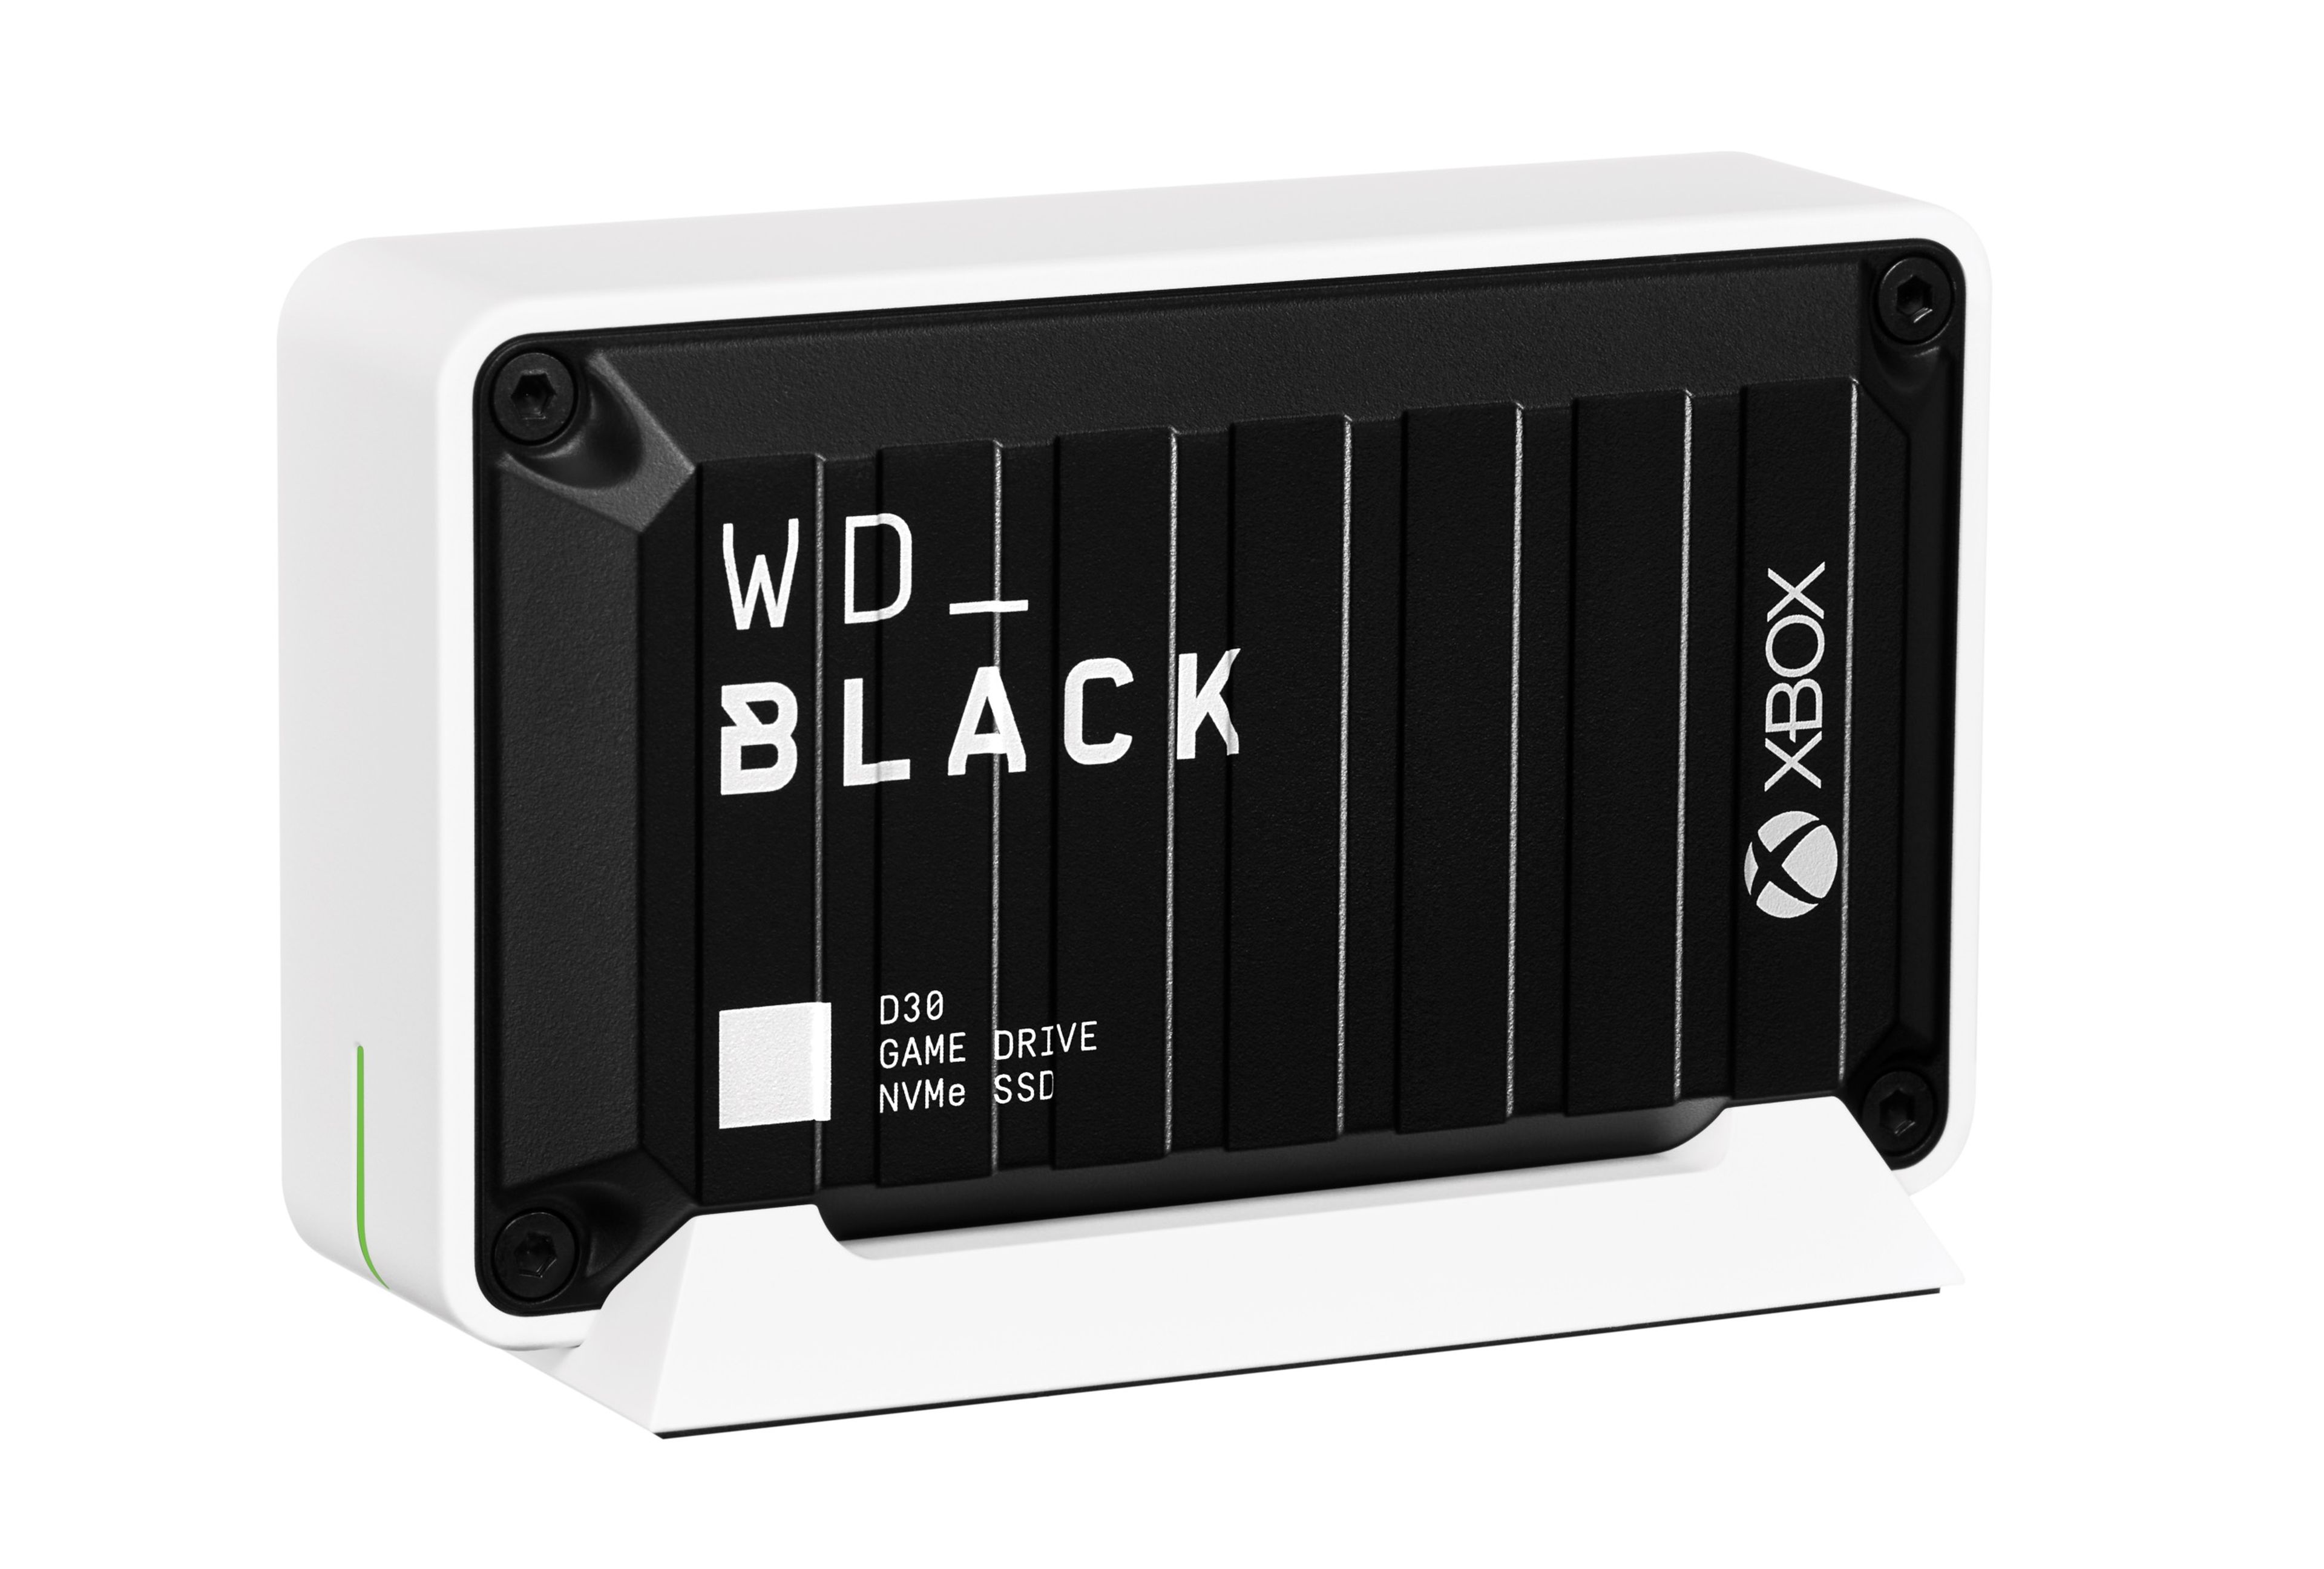 WD_BLACK D30 Game Drive SSD Xbox